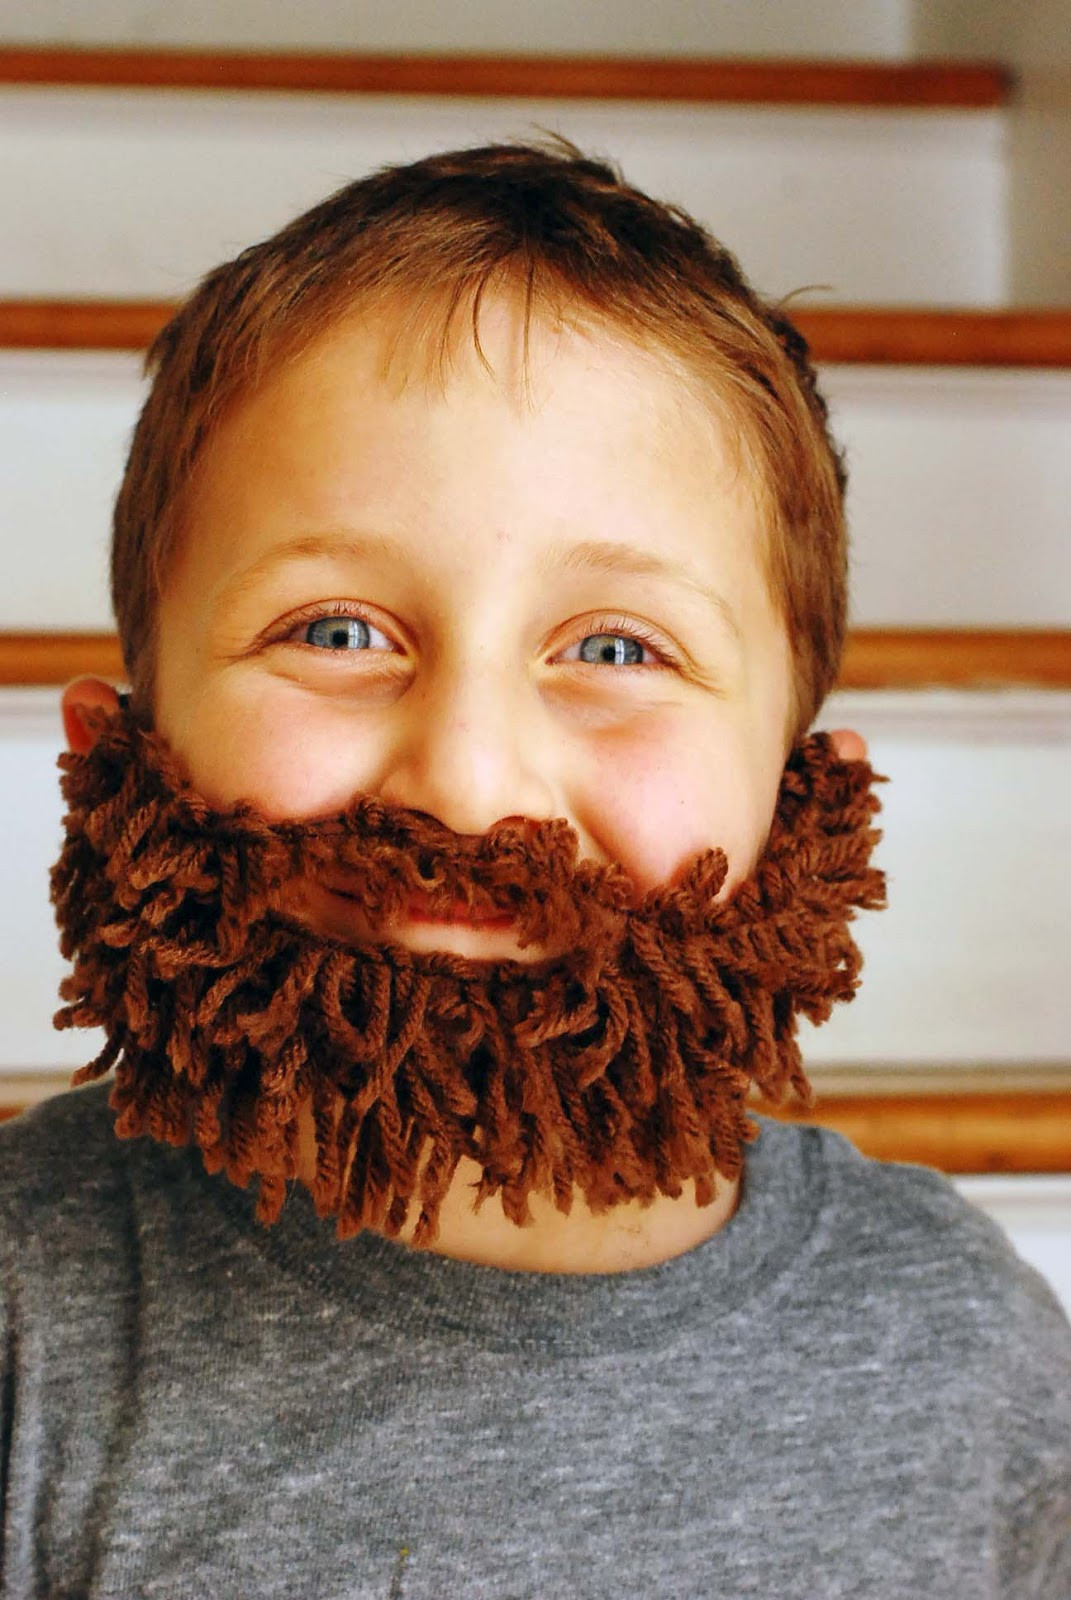 Best ideas about DIY Beard Costume
. Save or Pin Q made DIY Yarn Beard Now.